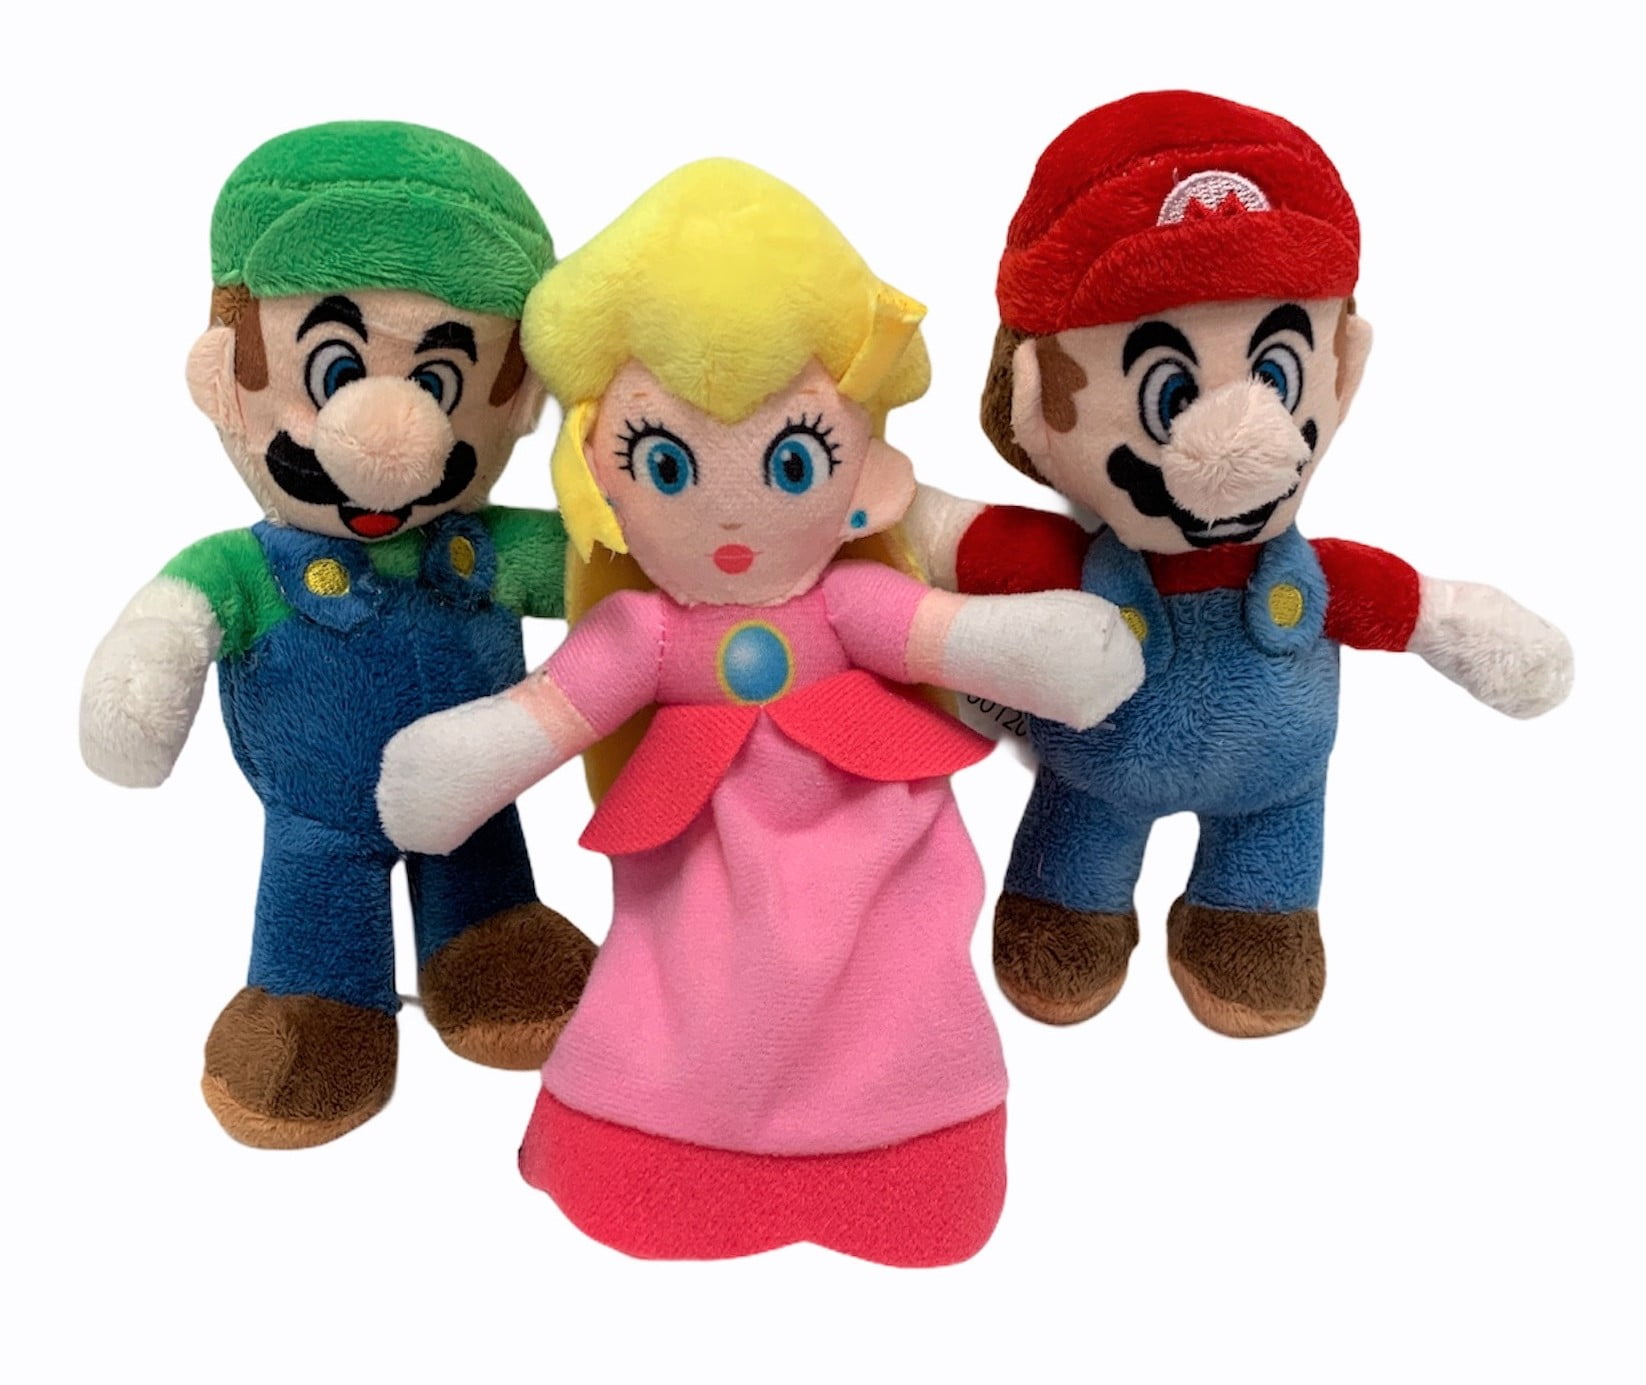 Super Mario Series Maker Mario Wedding Mario Plush Doll Stuffed Soft Kid Toy